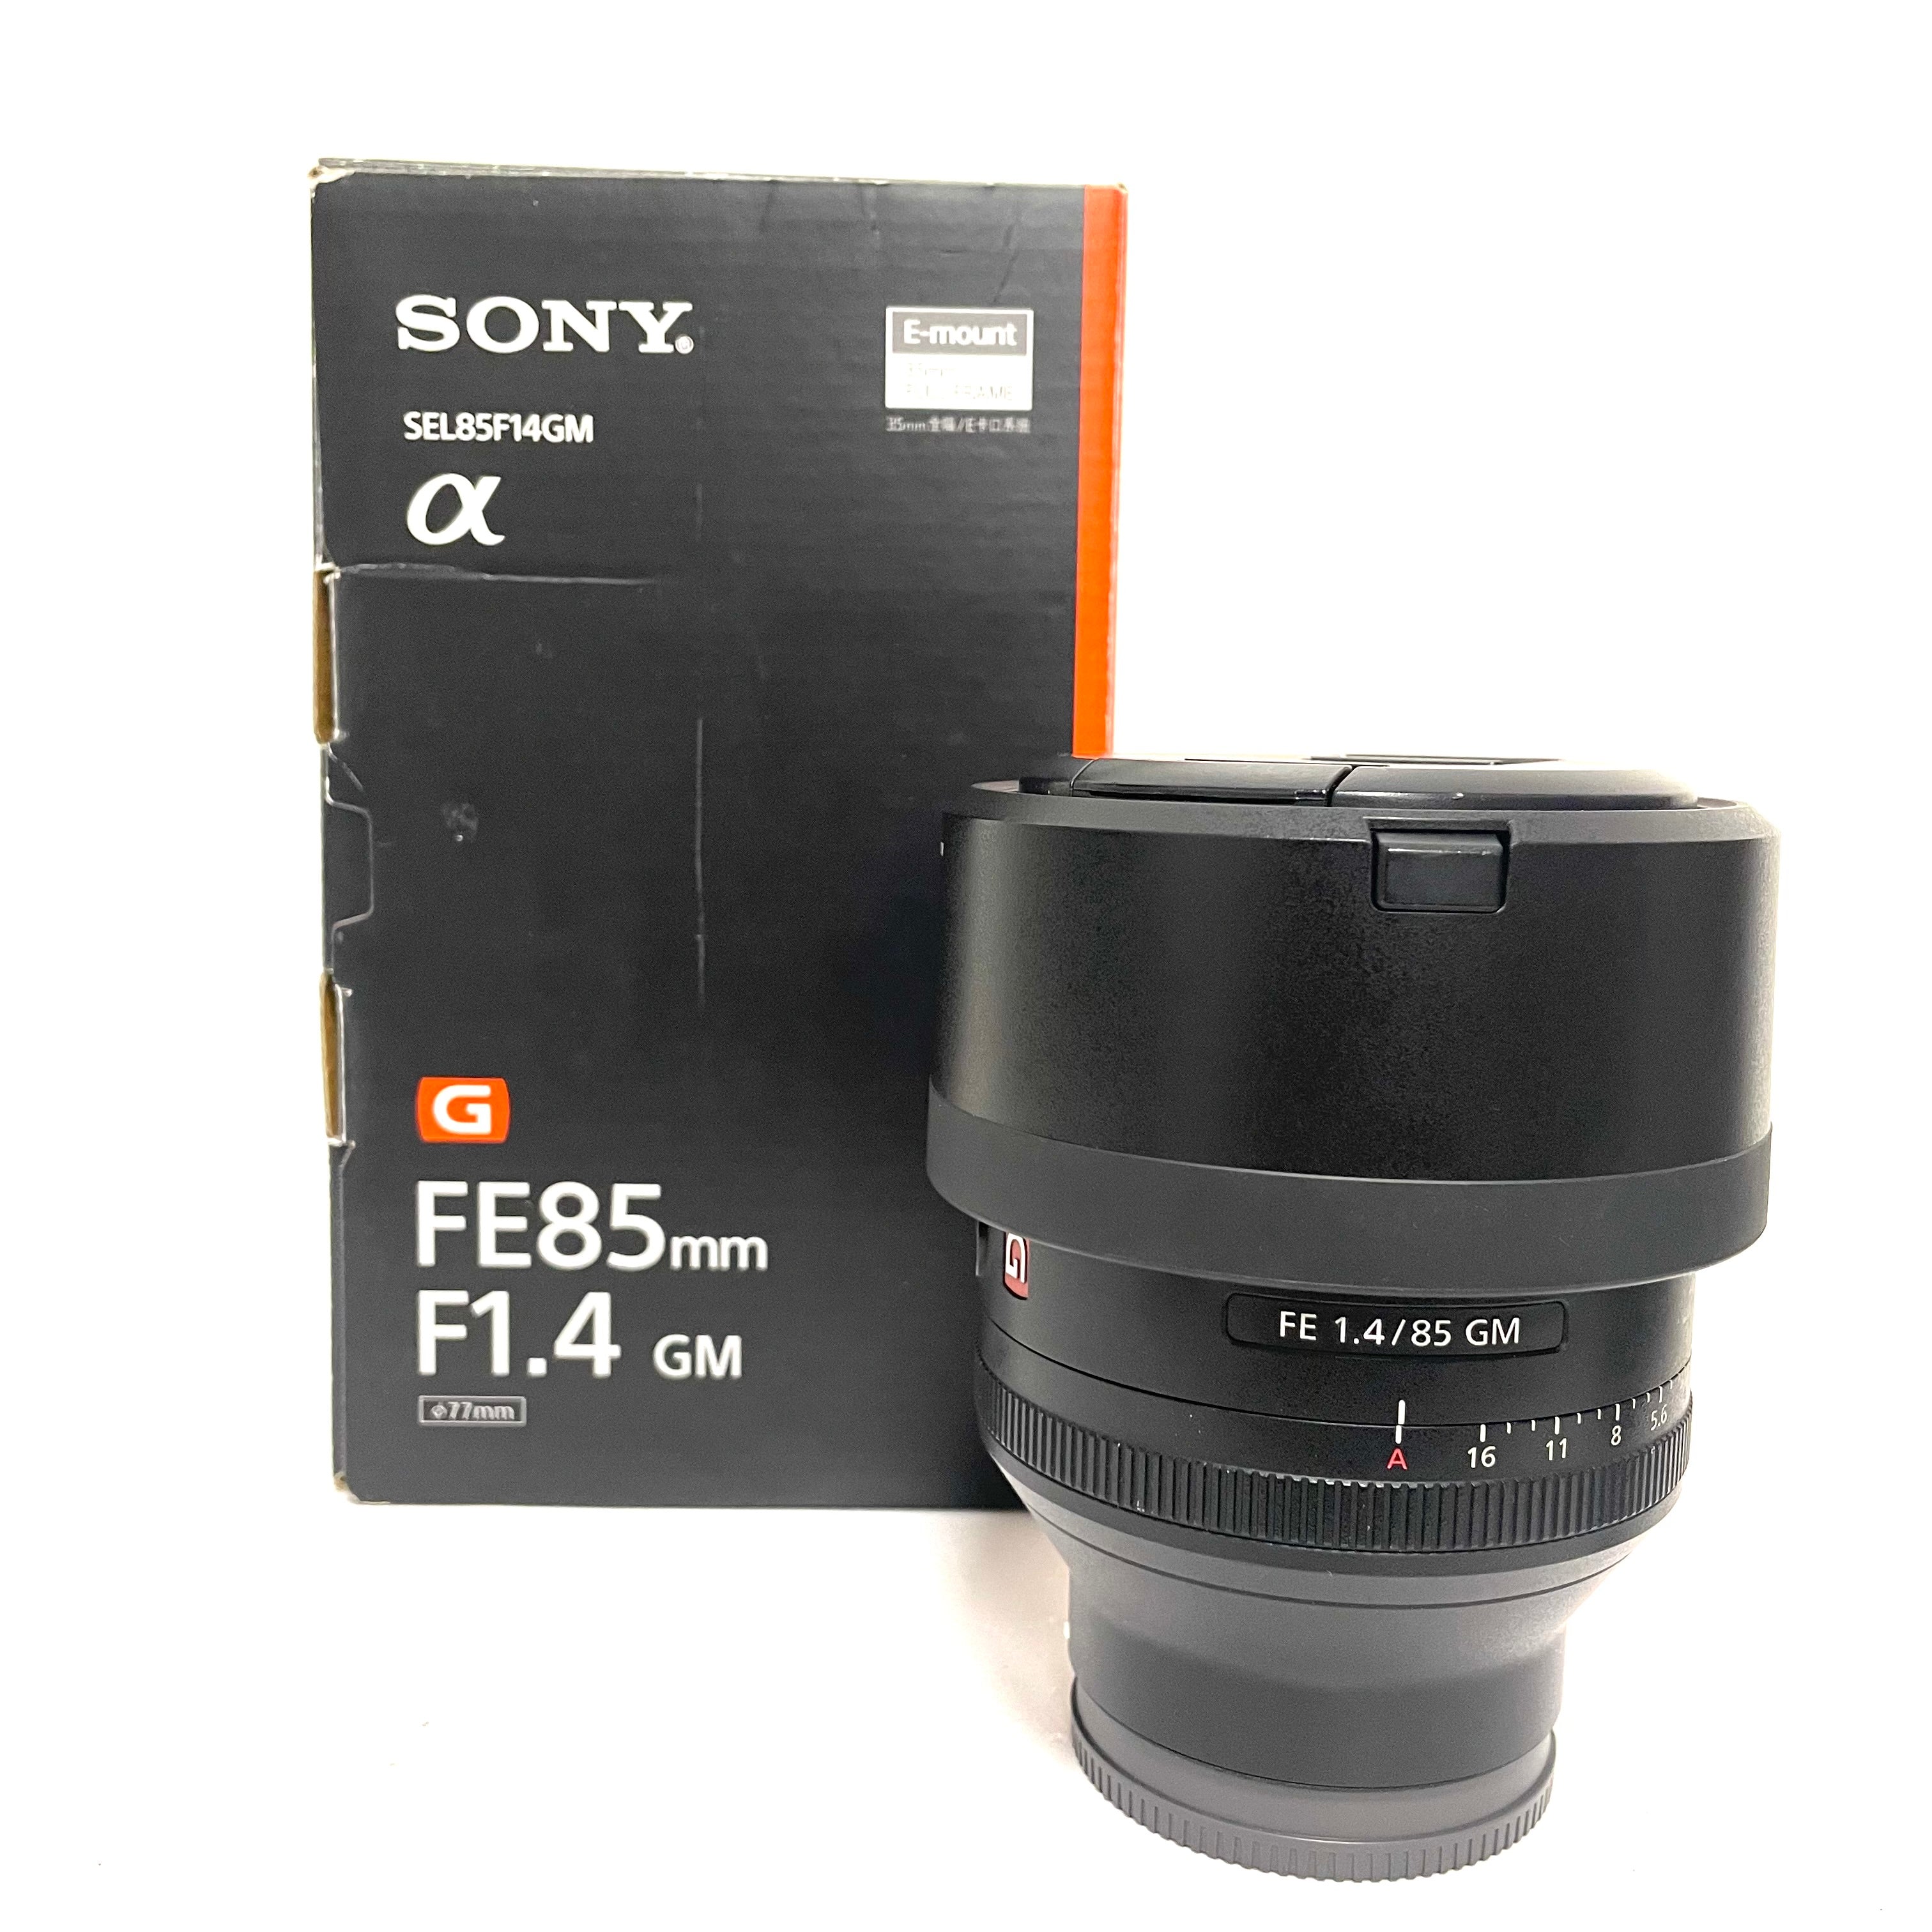 Sony Fe 85mm f/1.4 GM usato